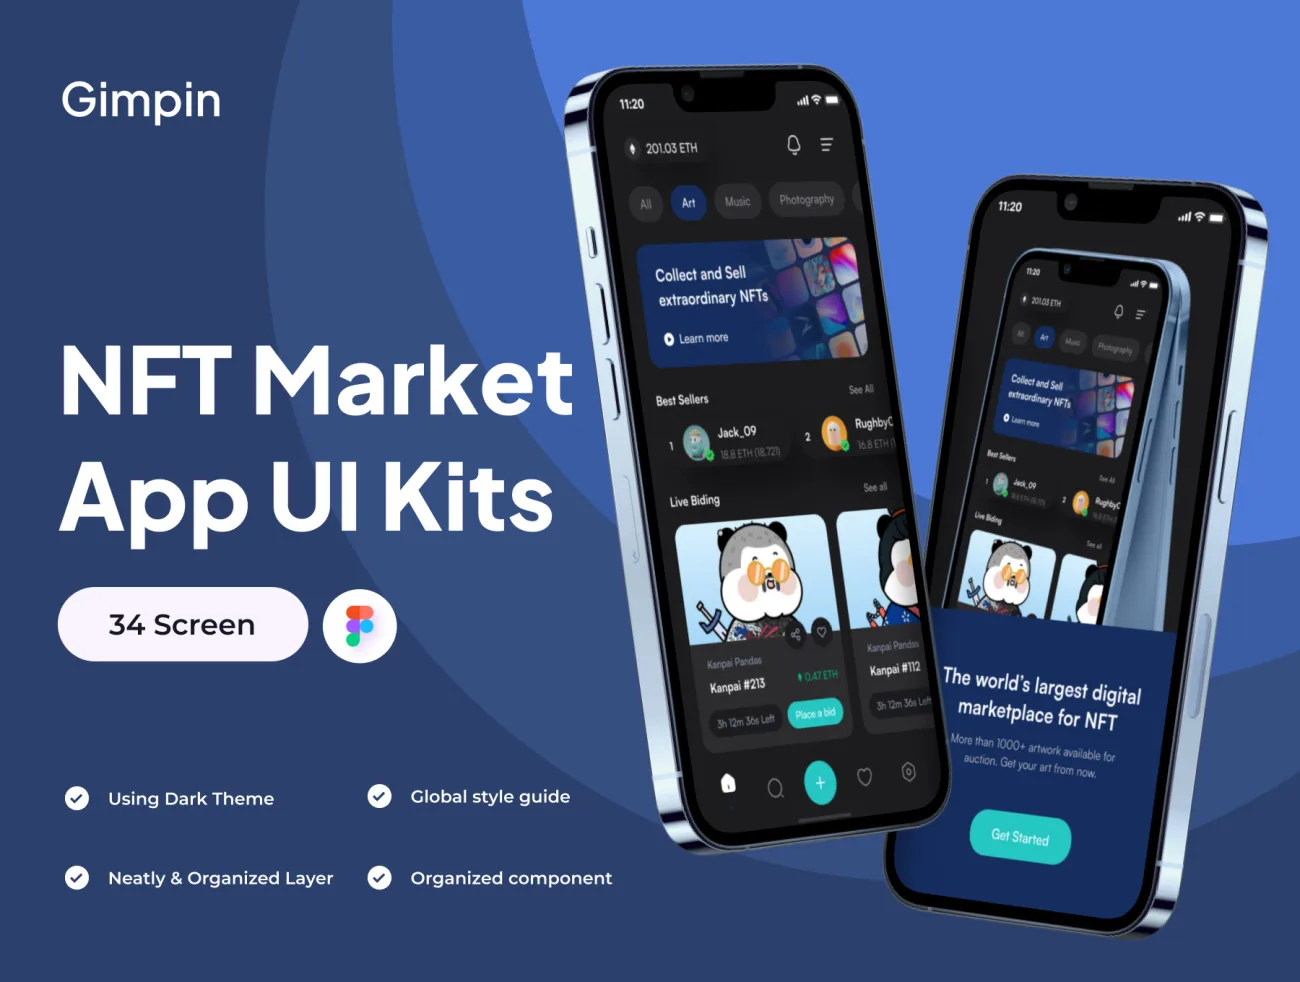 NFT交易市场应用程序 UI 套件34屏 Gimpin - NFT Market Apps UI Kits .figma-UI/UX、ui套件、主页、列表、应用、网购、详情-到位啦UI